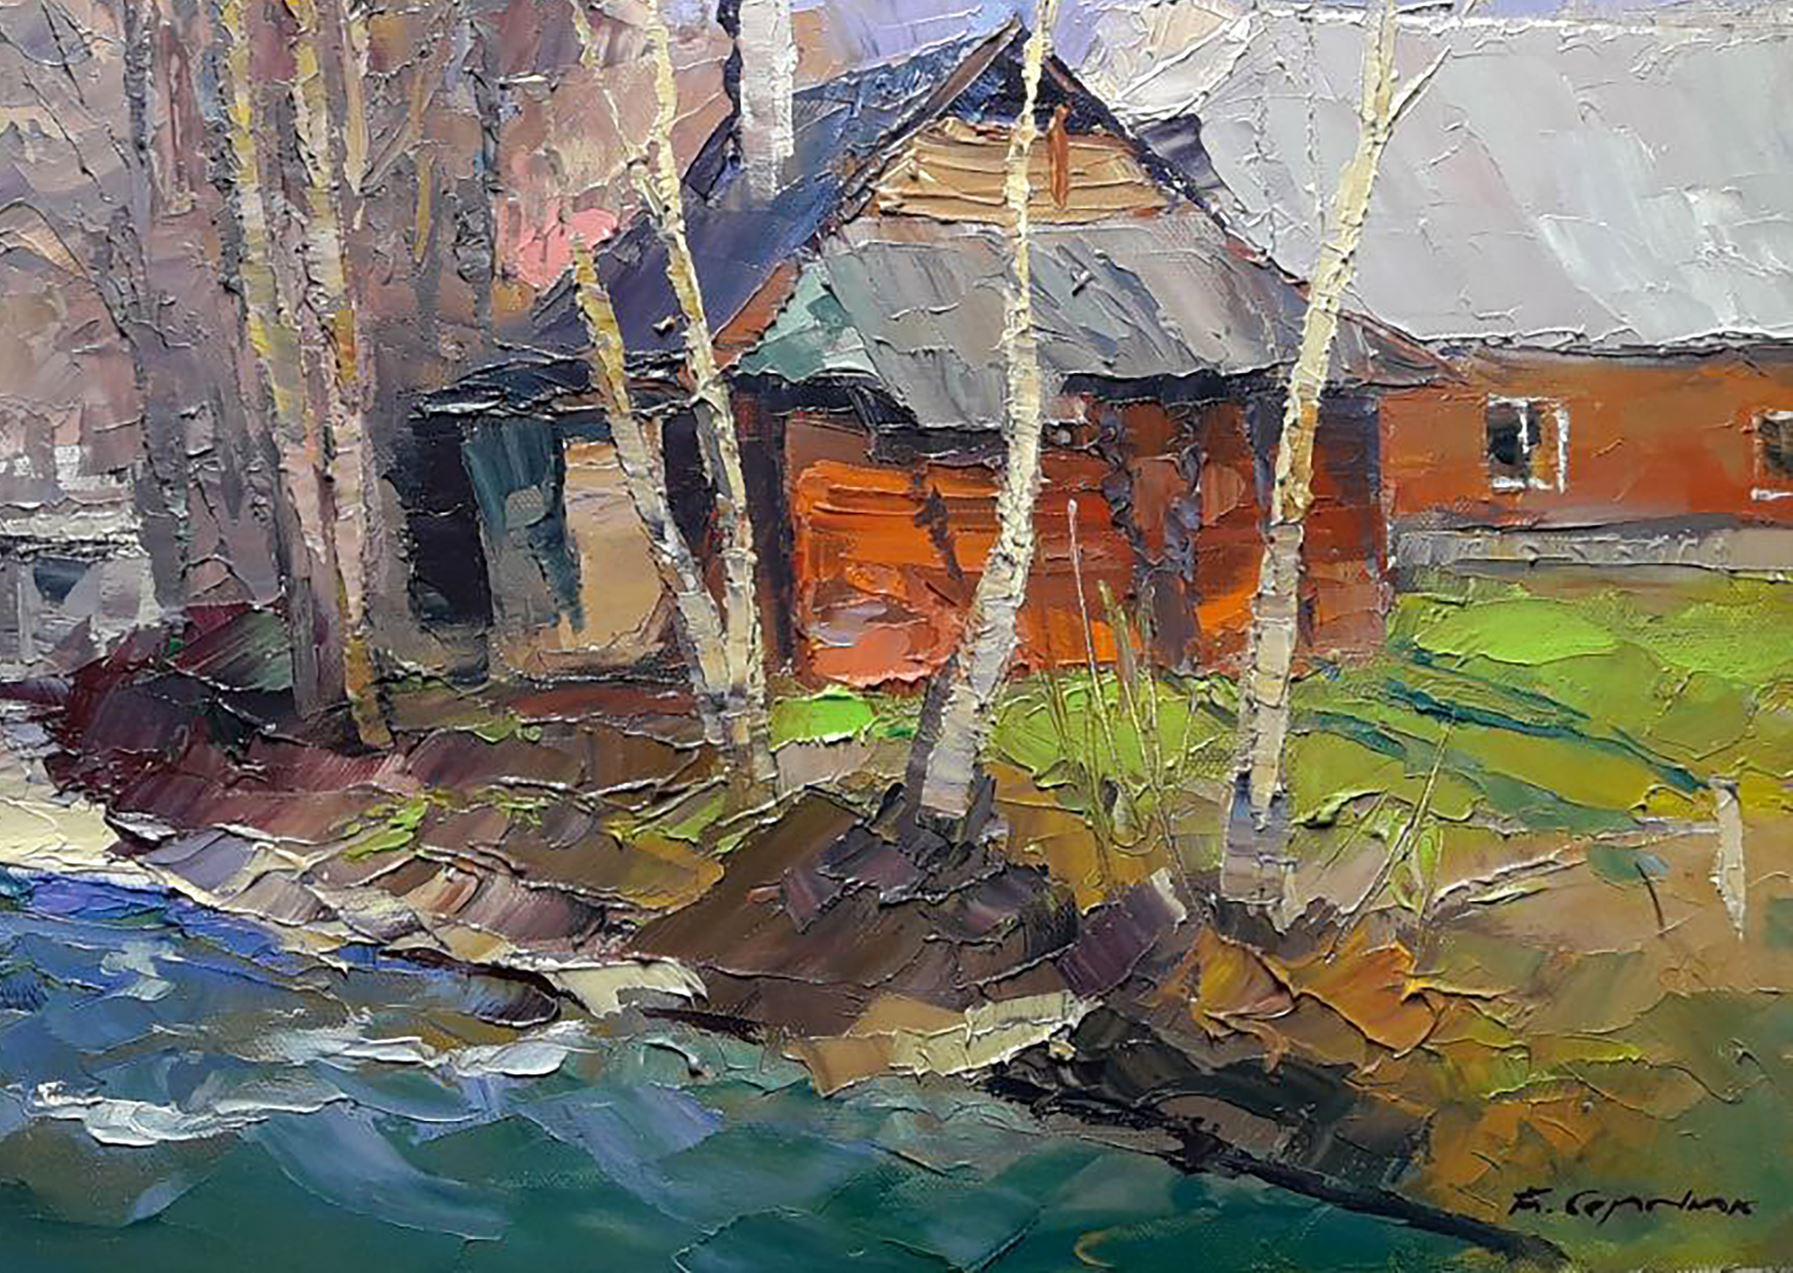 Artist: Boris Serdyuk 
Work: Original oil painting, handmade artwork, one of a kind 
Medium: Oil on Canvas
Style: Impressionism
Year: 2020
Title: On the river Paradzhi
Size: 19.5